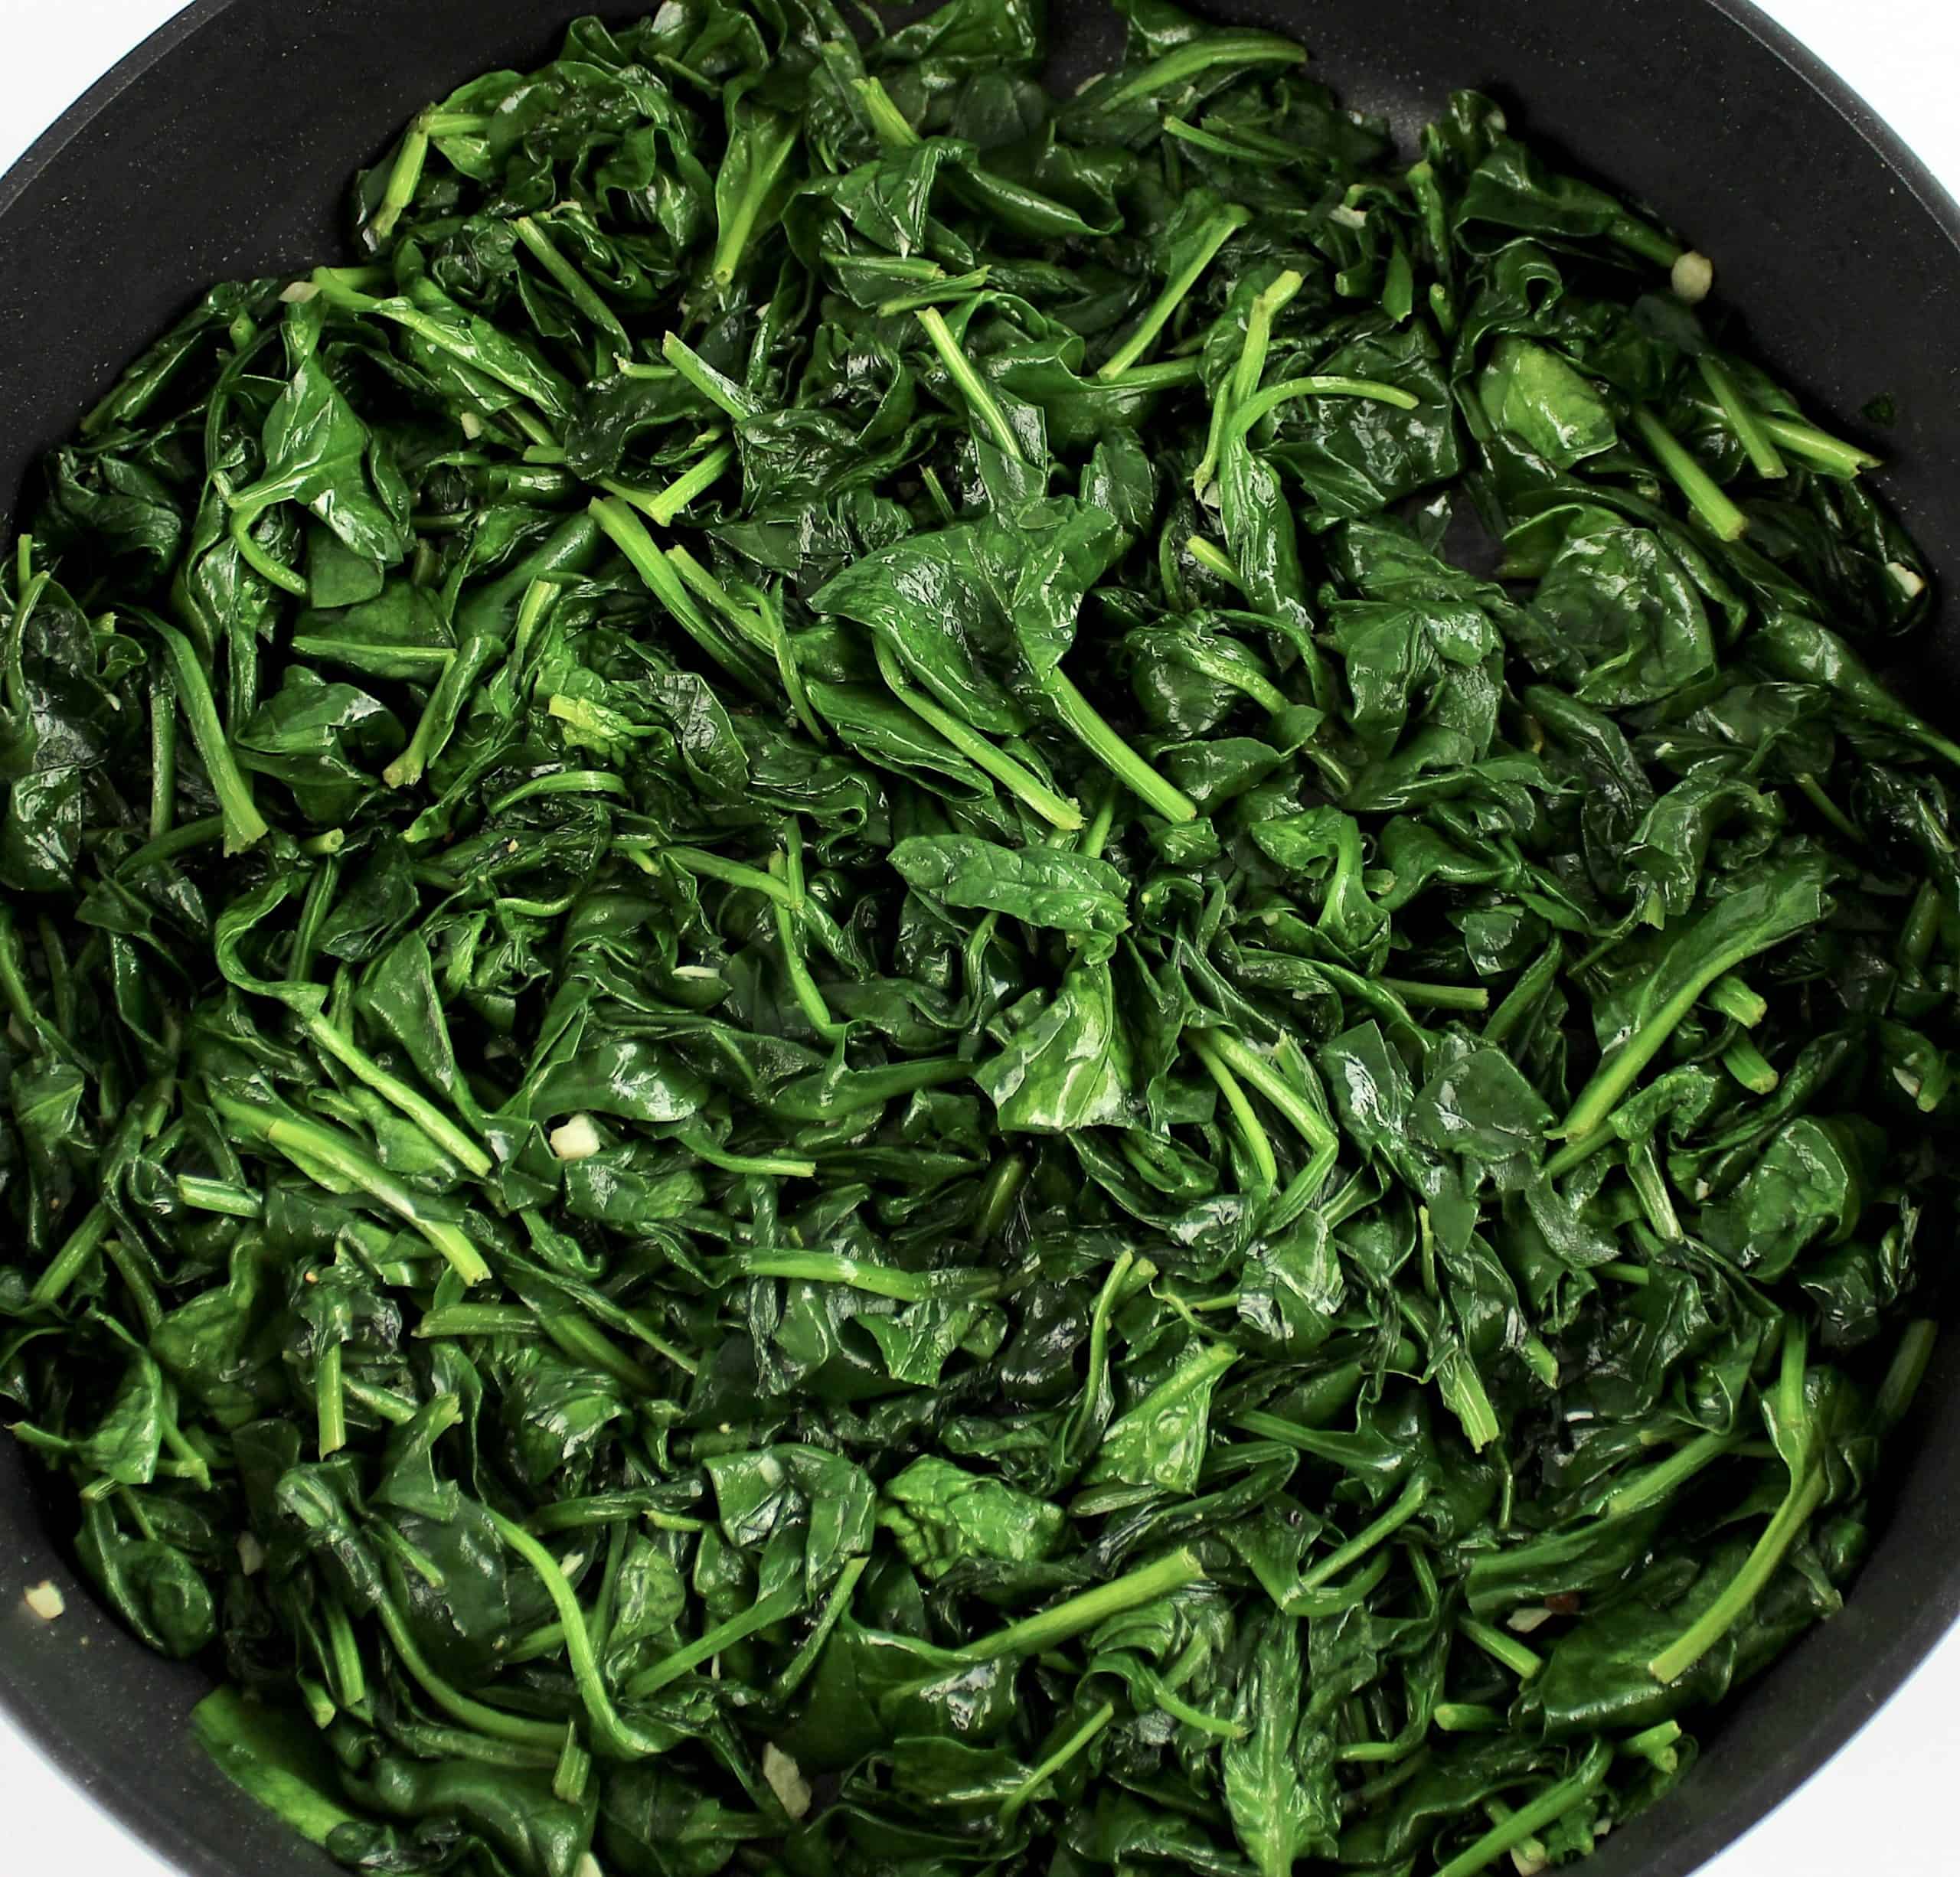 Sautéed spinach in skillet with garlic